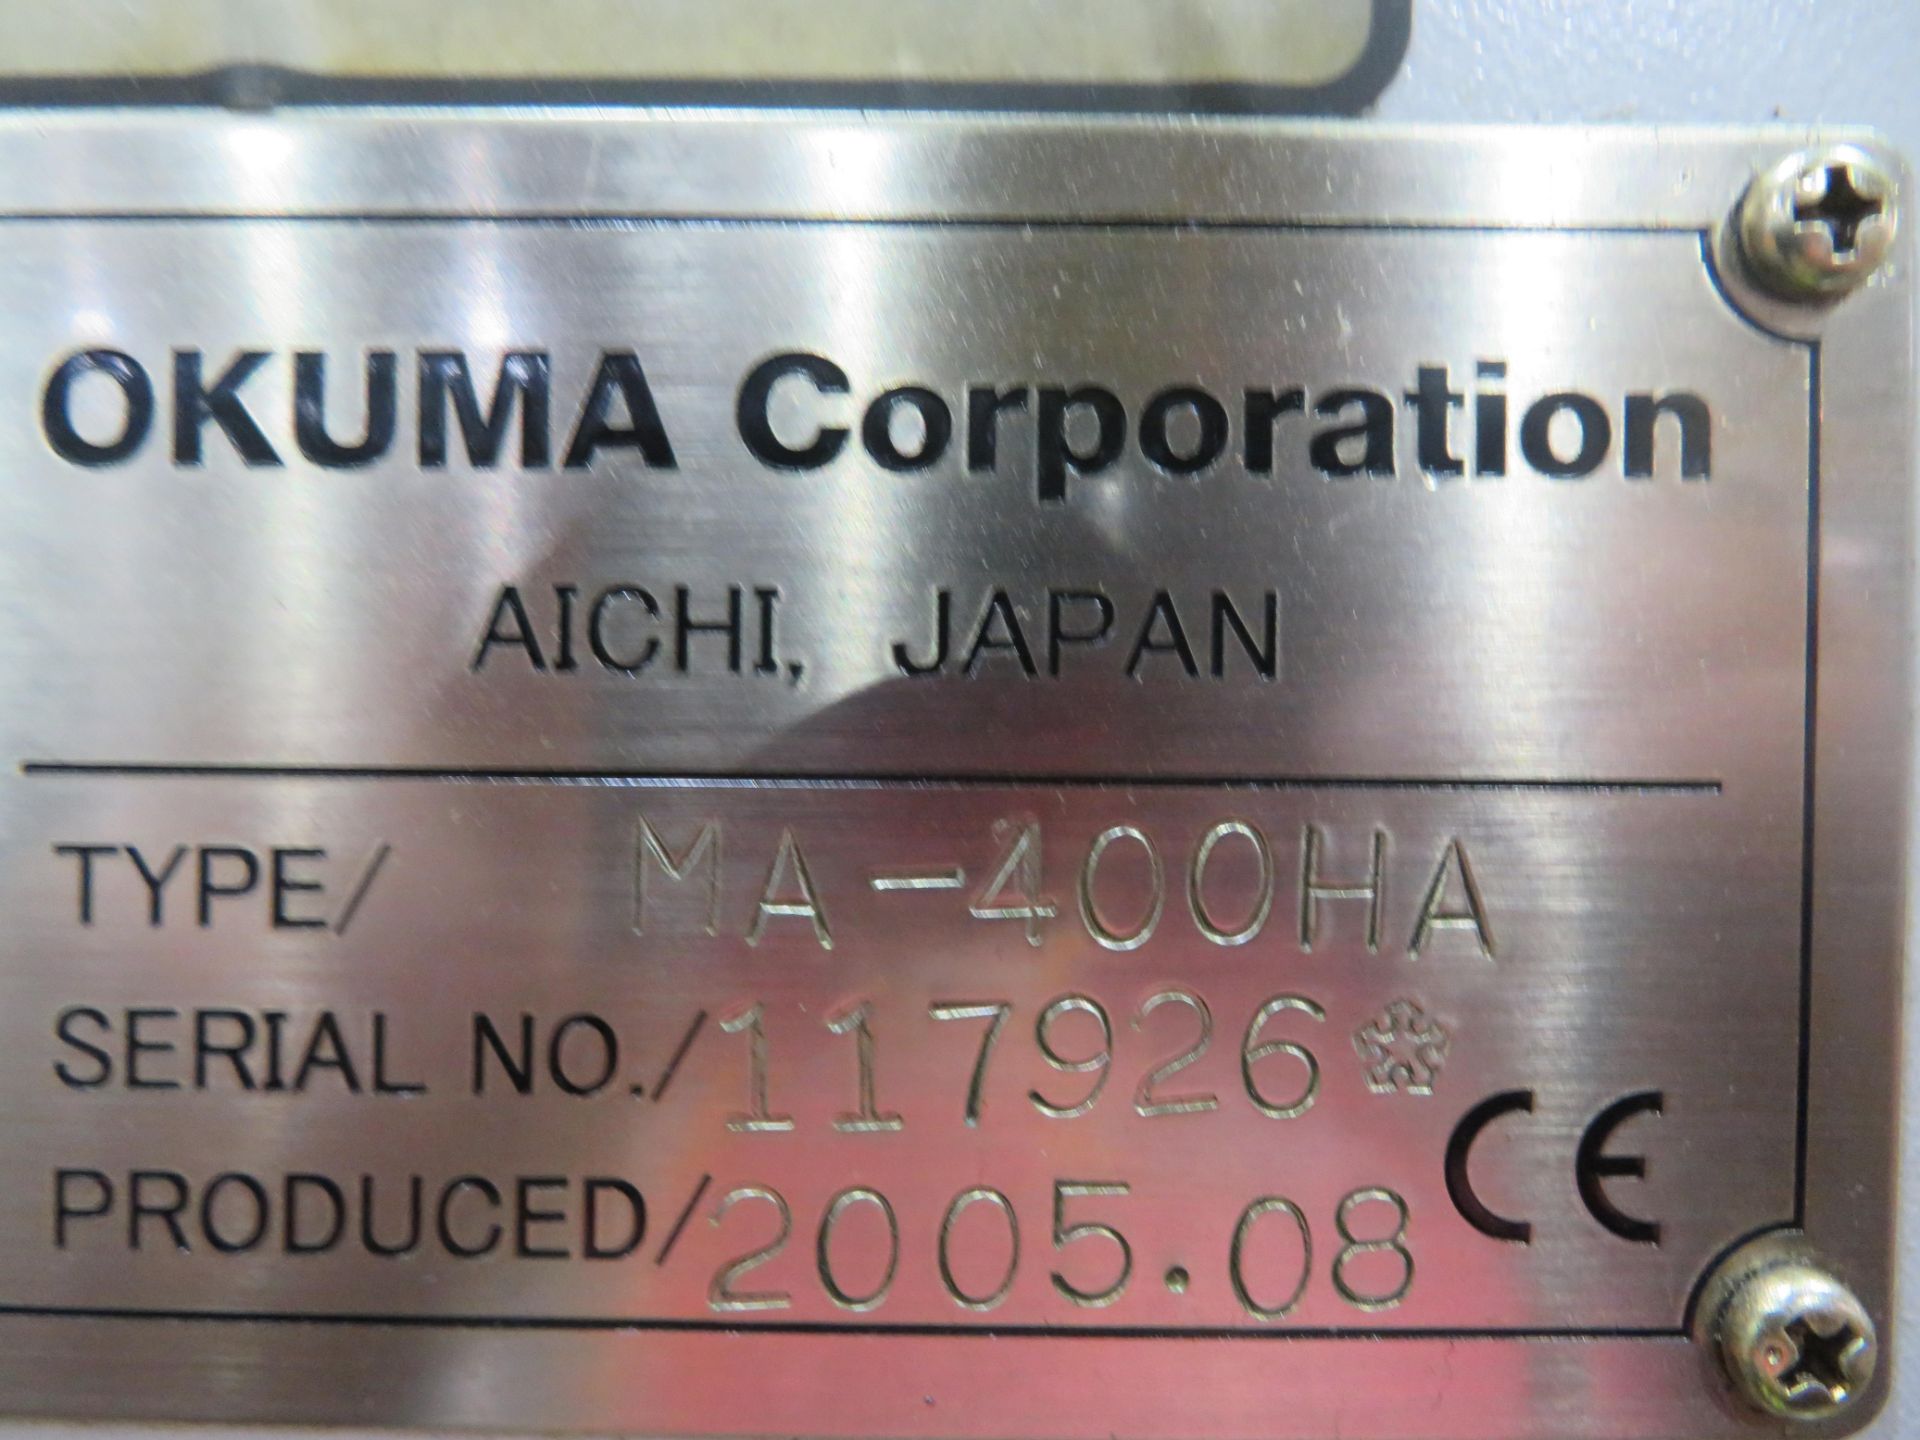 Okuma MA-400HA Horizontal Machining Centre - Image 9 of 10